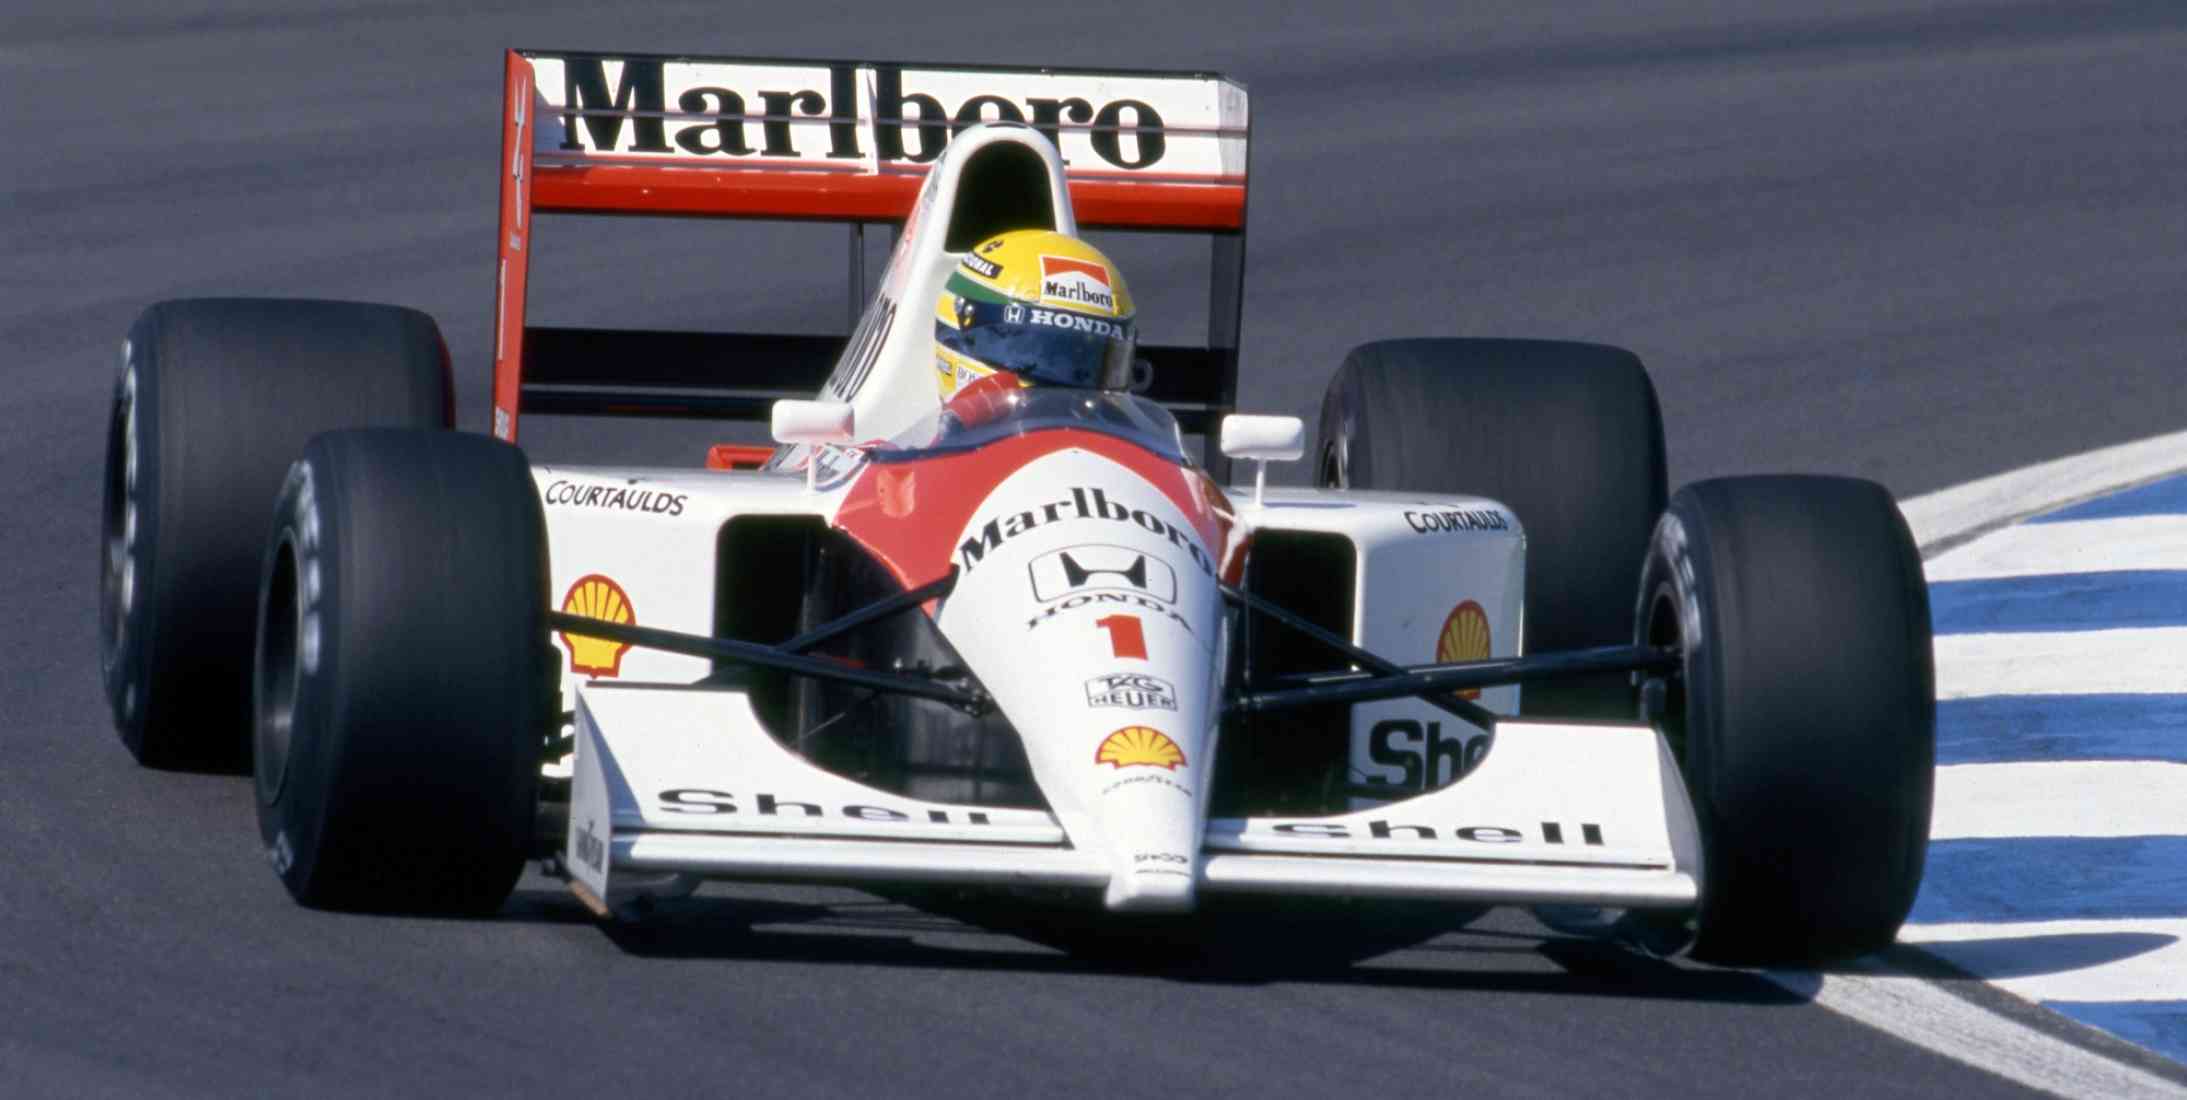 Three times Formula 1 World Champion Ayrton Senna from Brazil drivers his McLaren F1 car around a race track